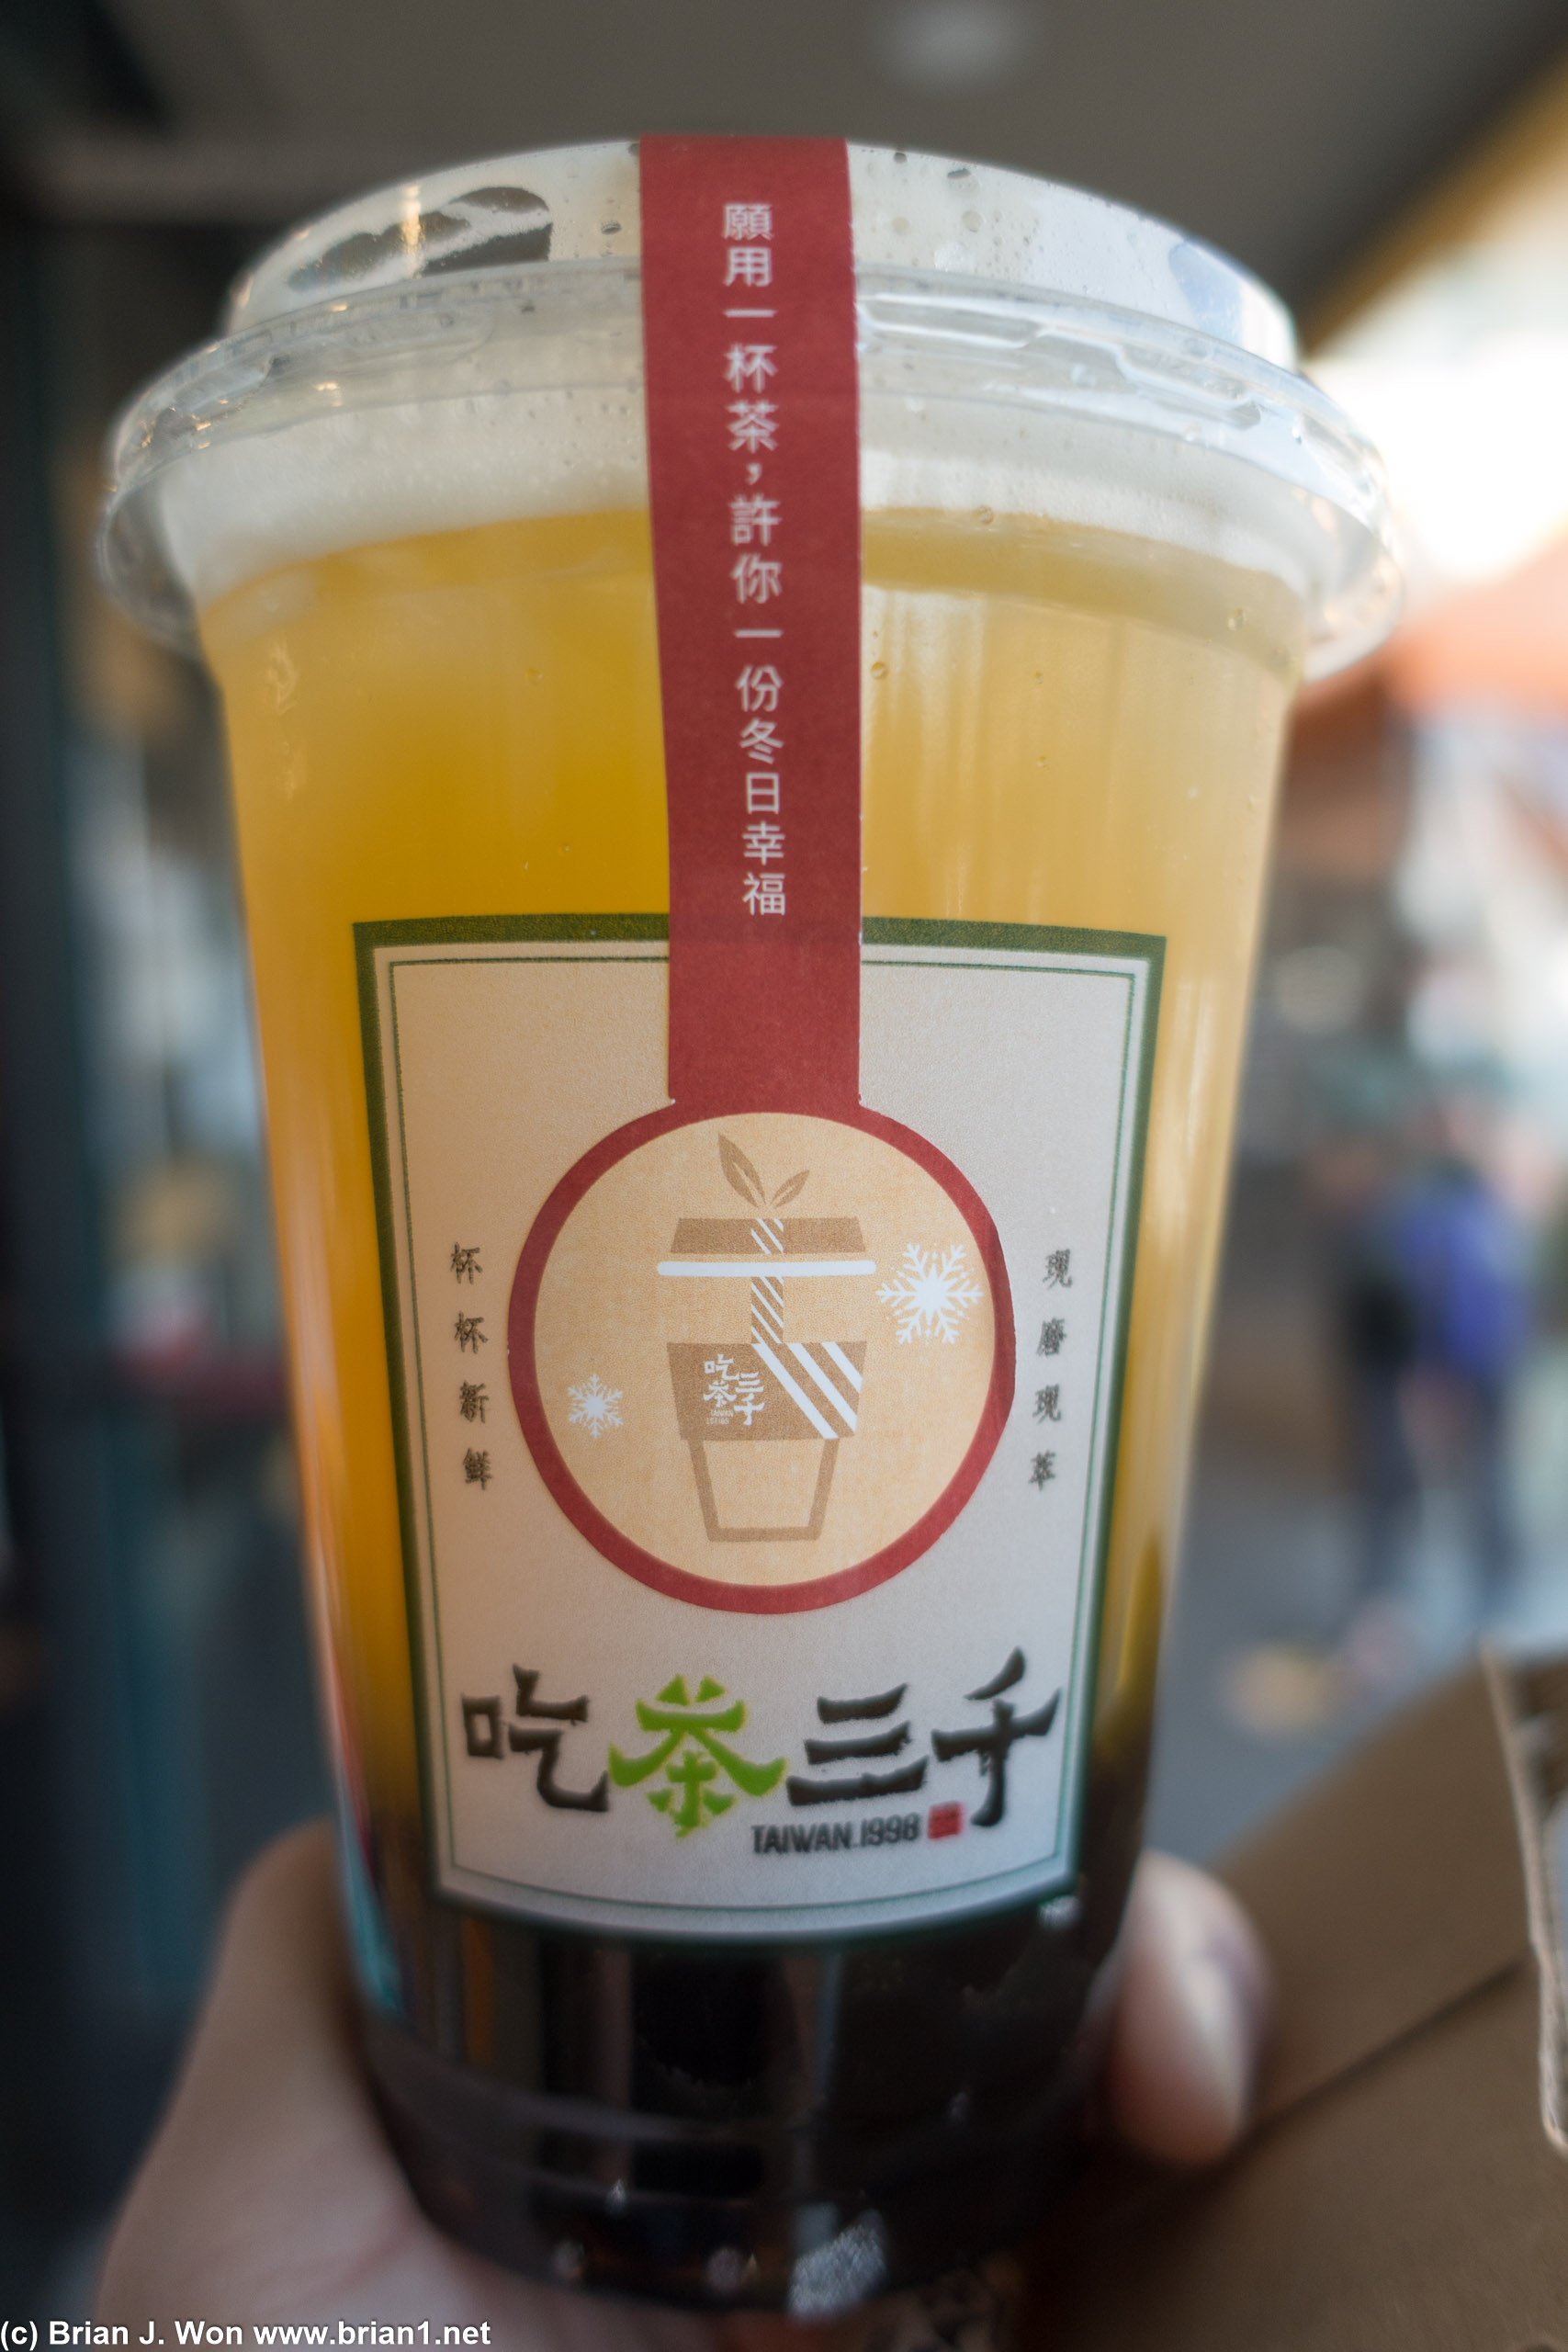 Mango green tea from Chicha San Chen. Pretty good.